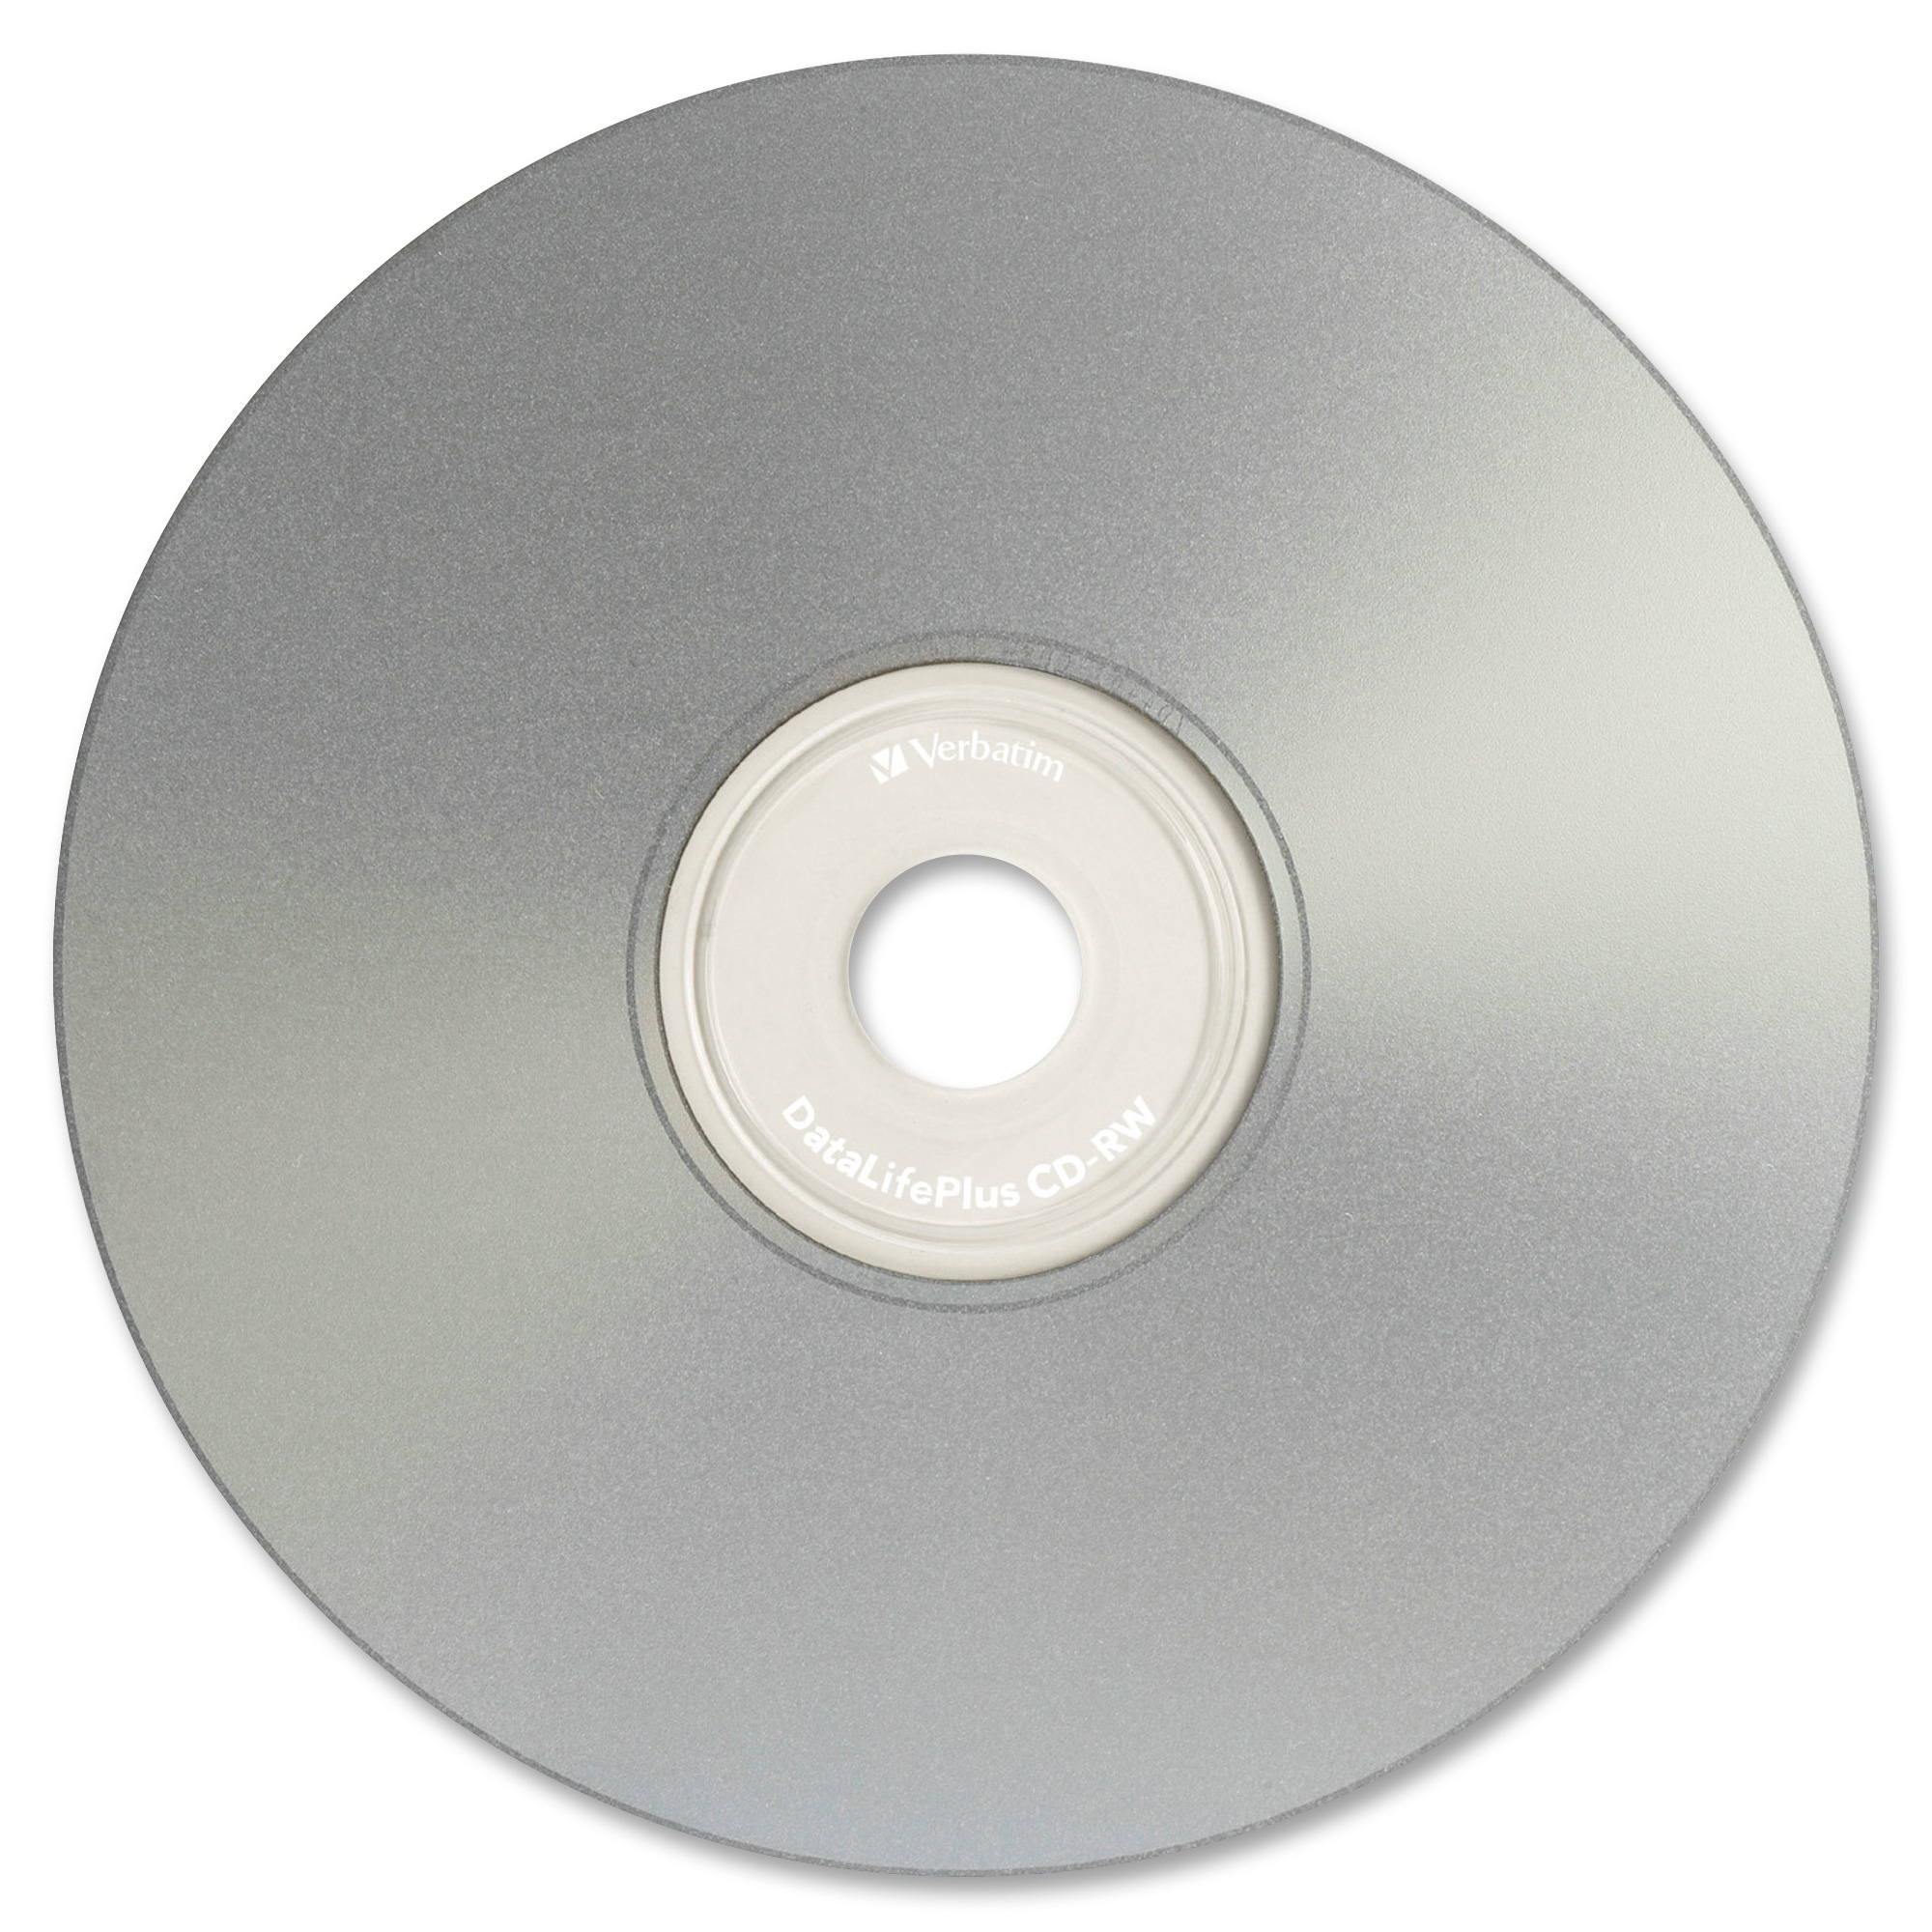 Verbatim CD-RW Discs, 700MB/80min, 4x, Silver - image 2 of 2